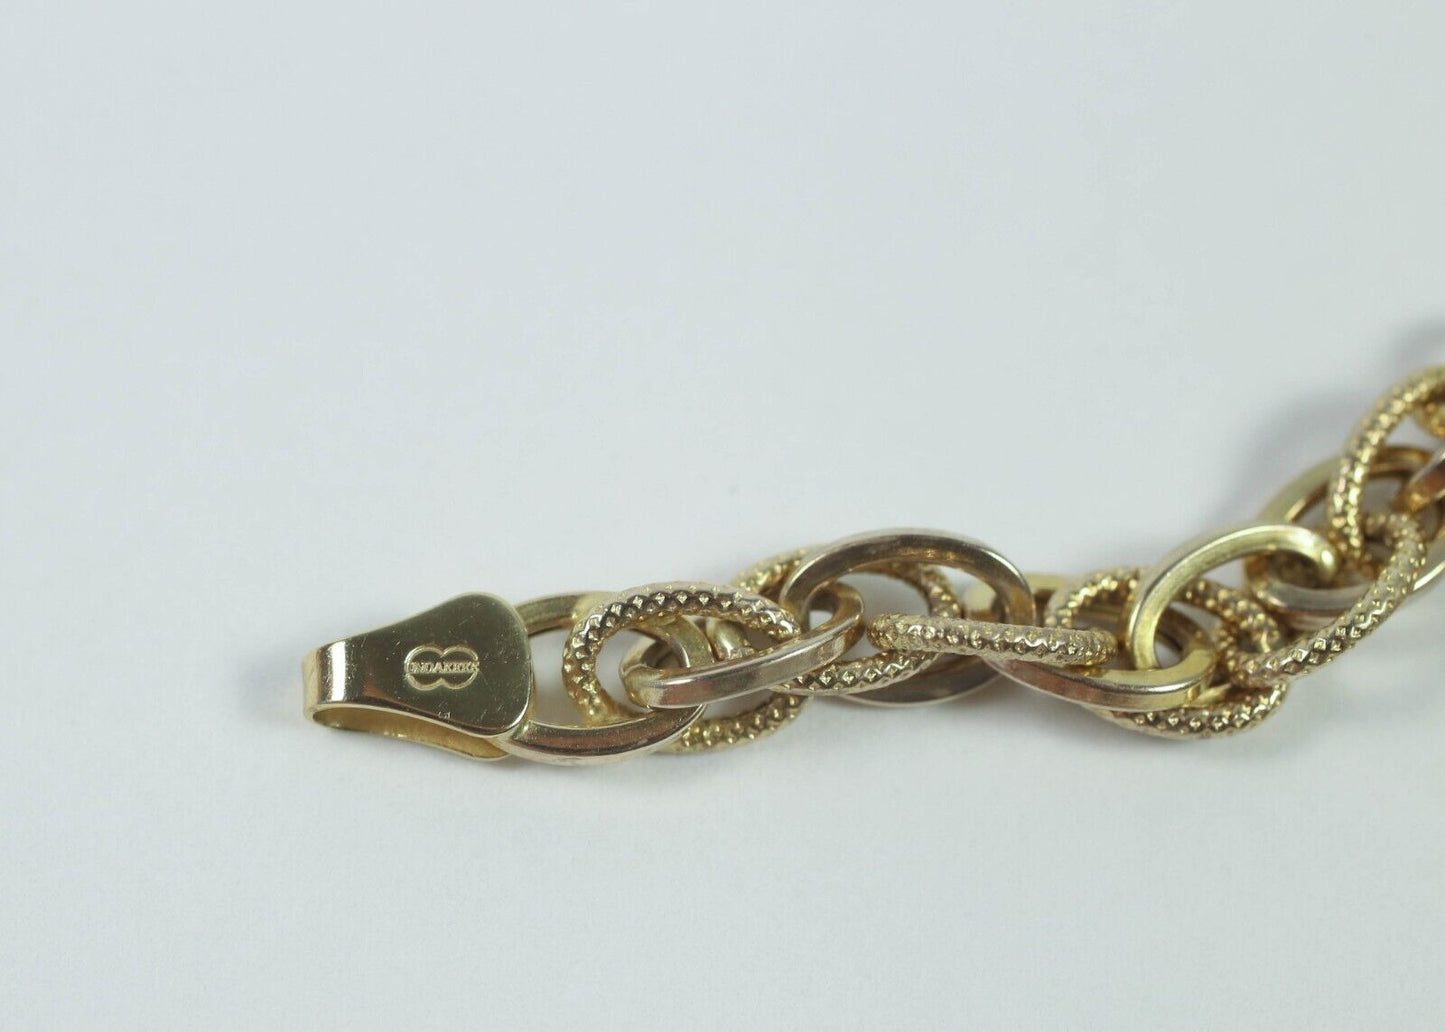 UnoAerre 14k Yellow Gold Bracelet, 7.0 inches - 4.7g